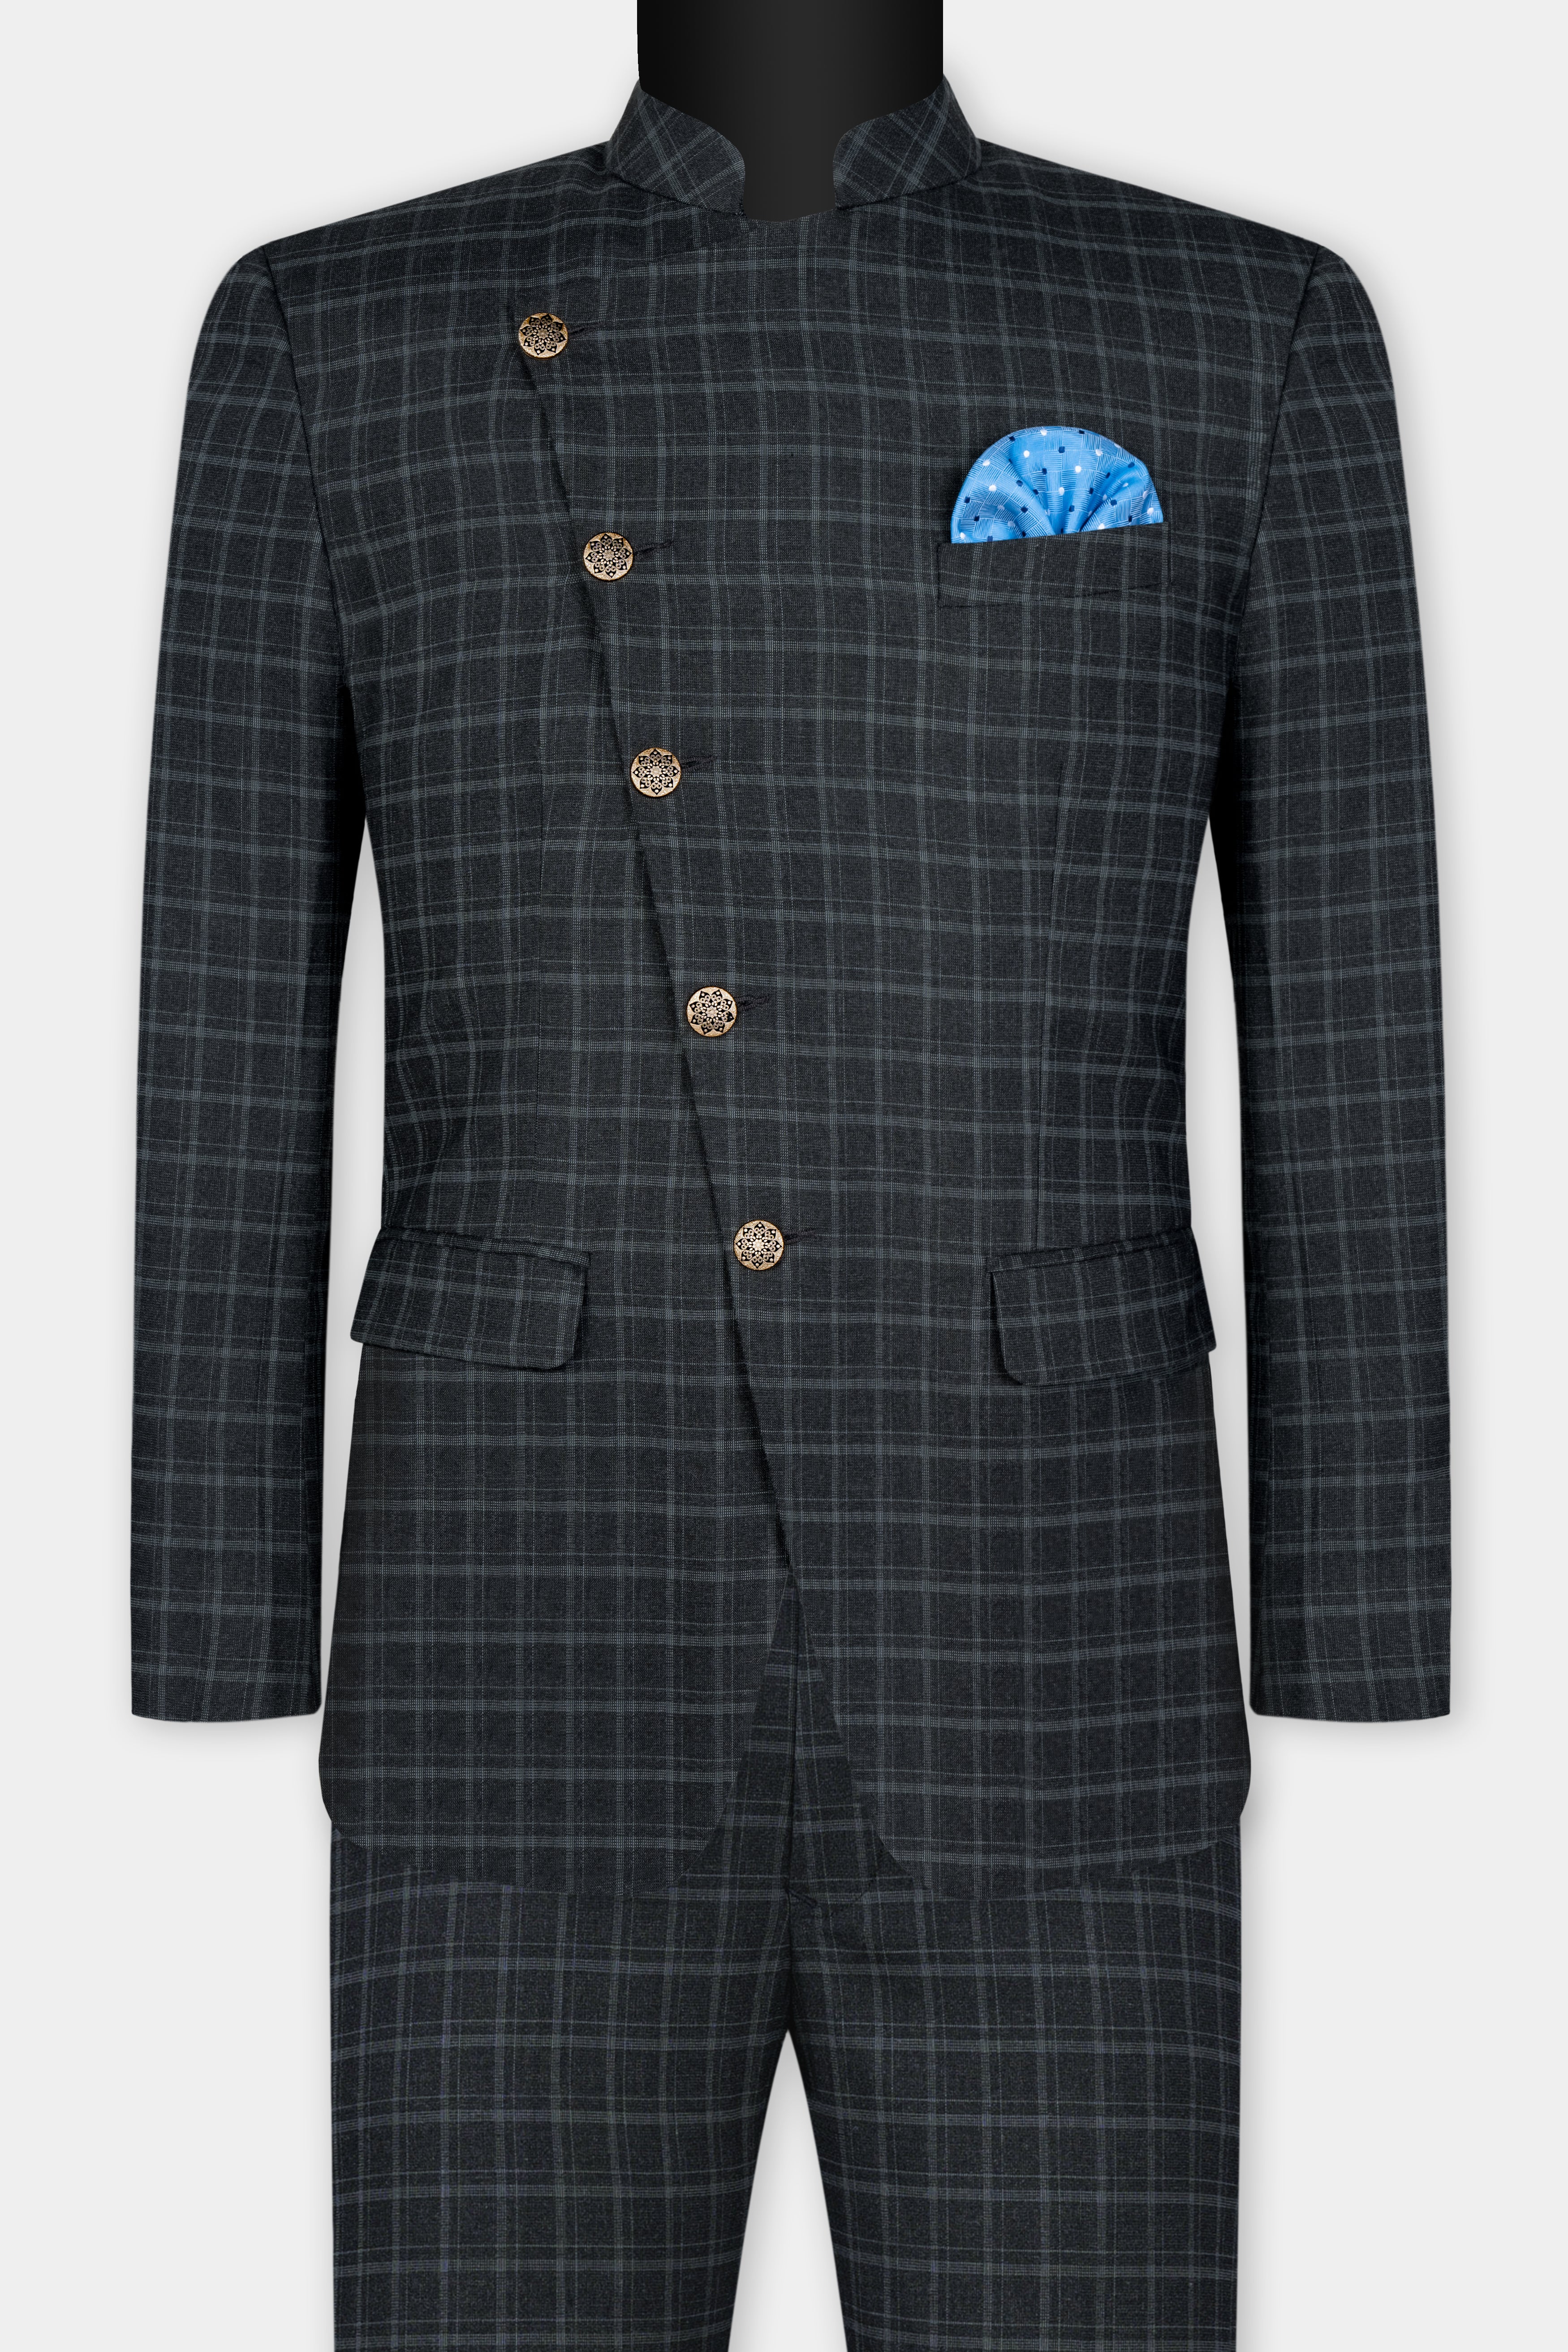 Cape God Gray windowpane Cross Bandhgala Suit